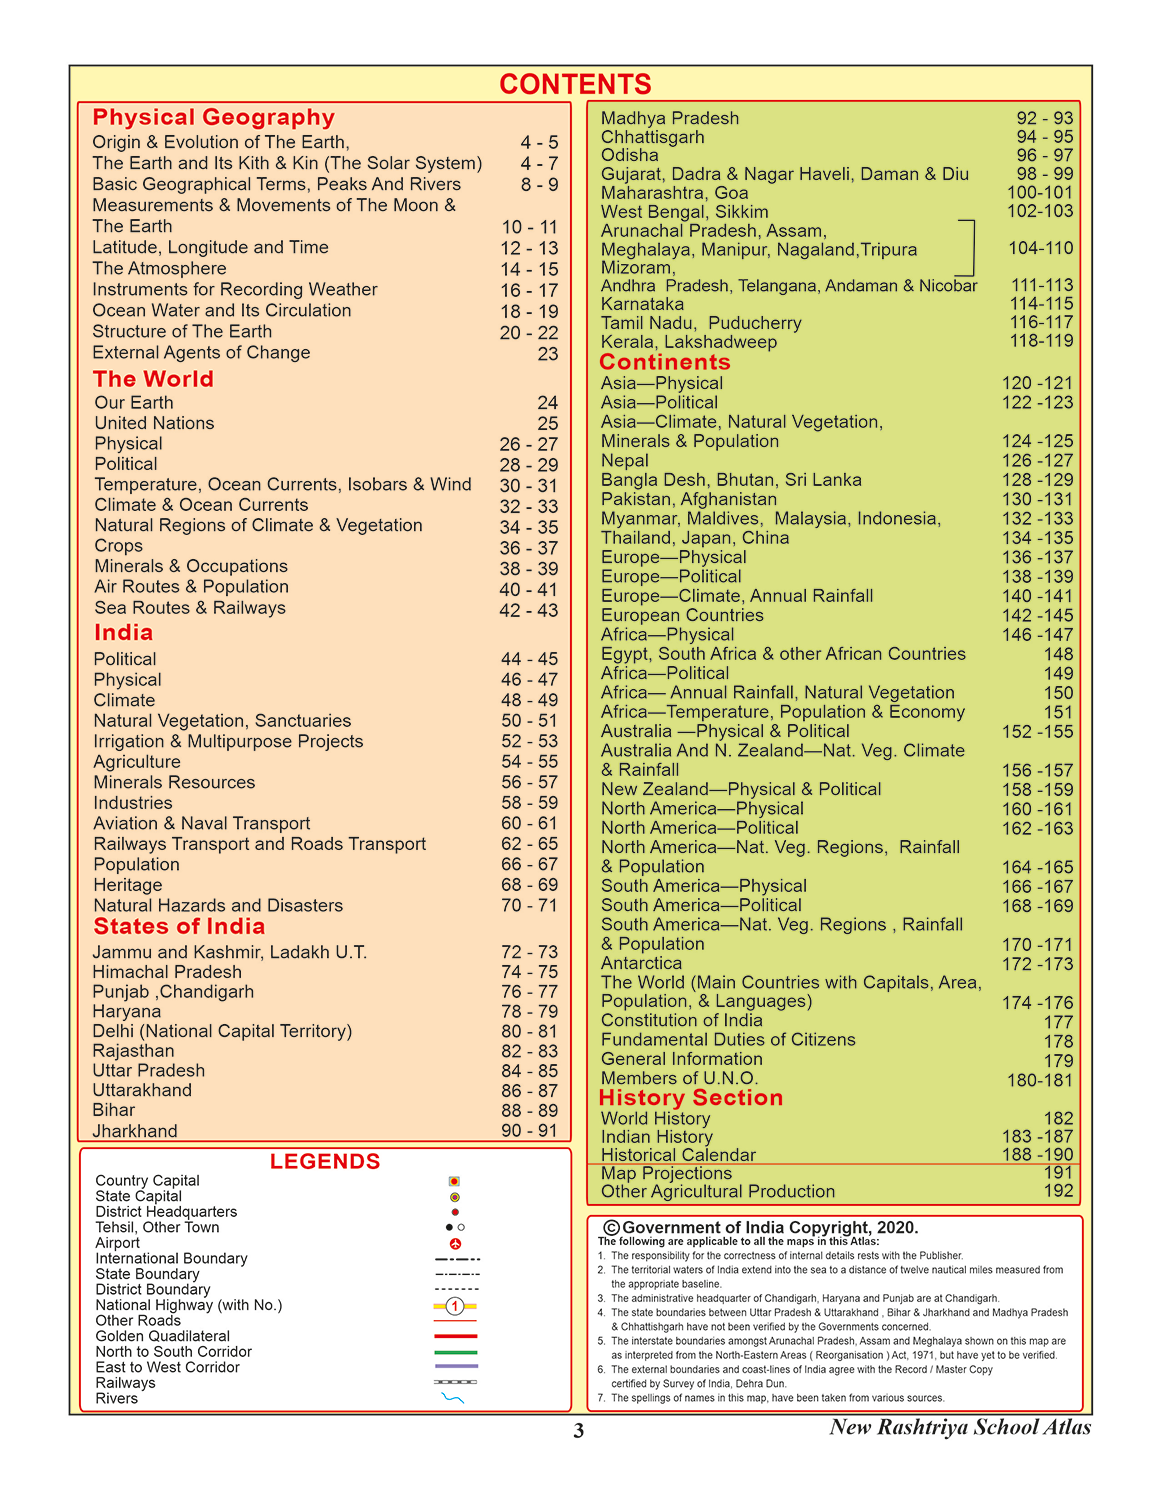 New Rashtriya School Atlas (english) Latest 2020 edition with useful notes